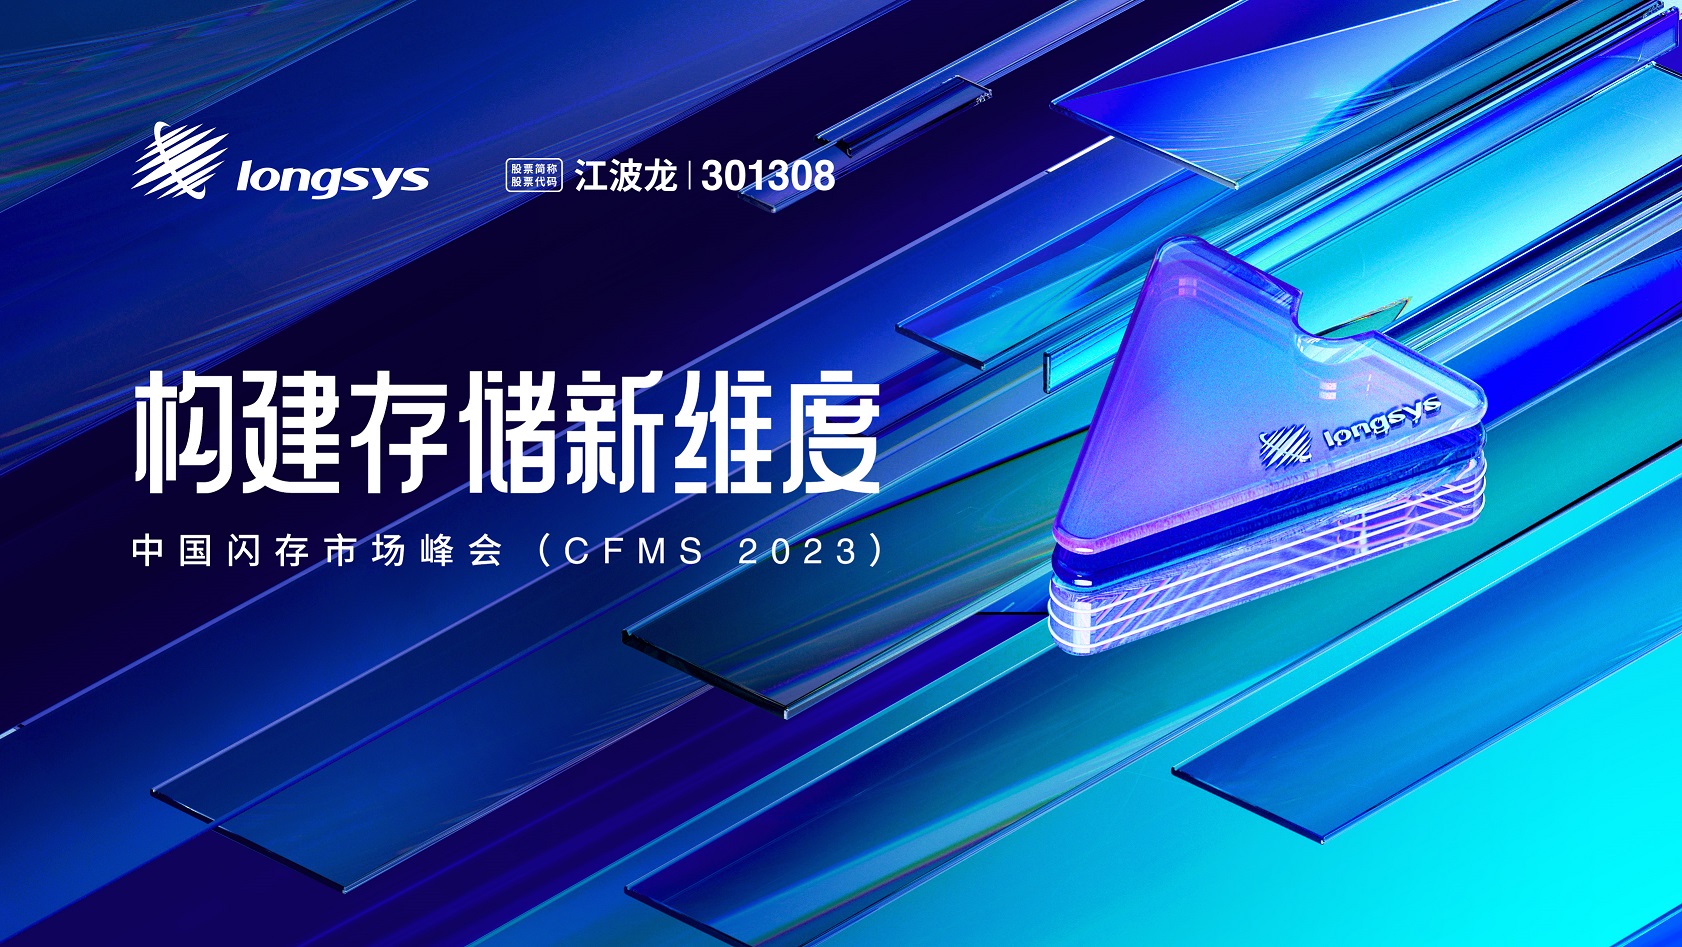 CFMS 2023 | 構建存儲新維度，江波龍邁向存儲綜合服務商